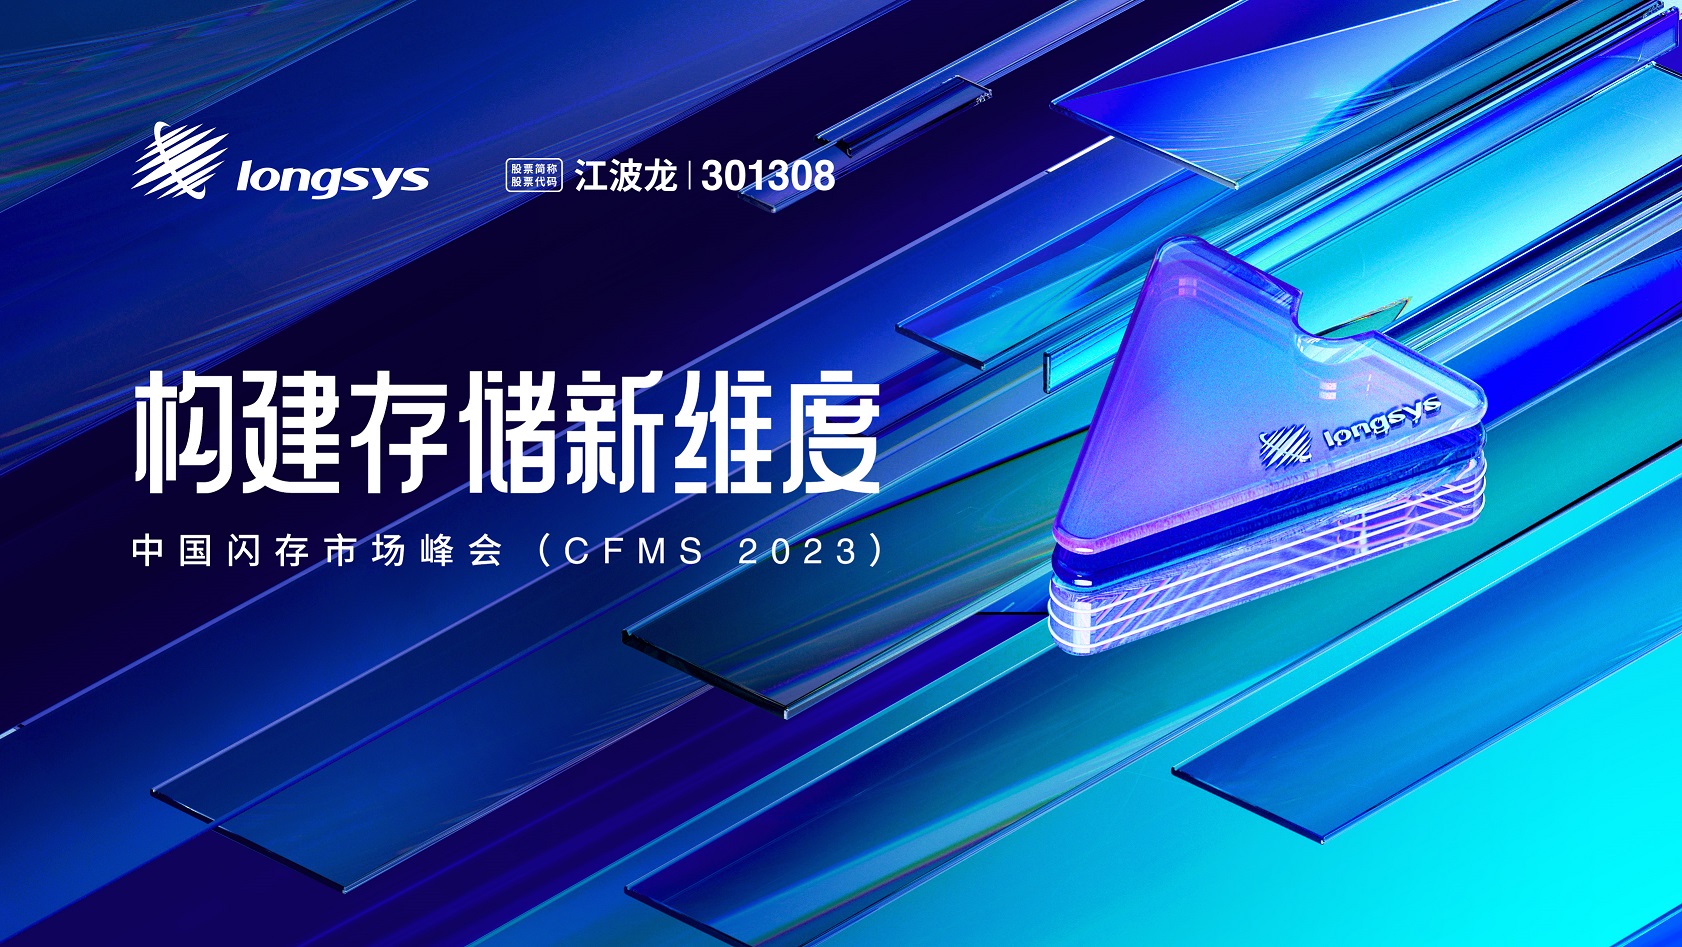 CFMS 2023 | 構建存儲新維度，江波龍邁向存儲綜合服務商